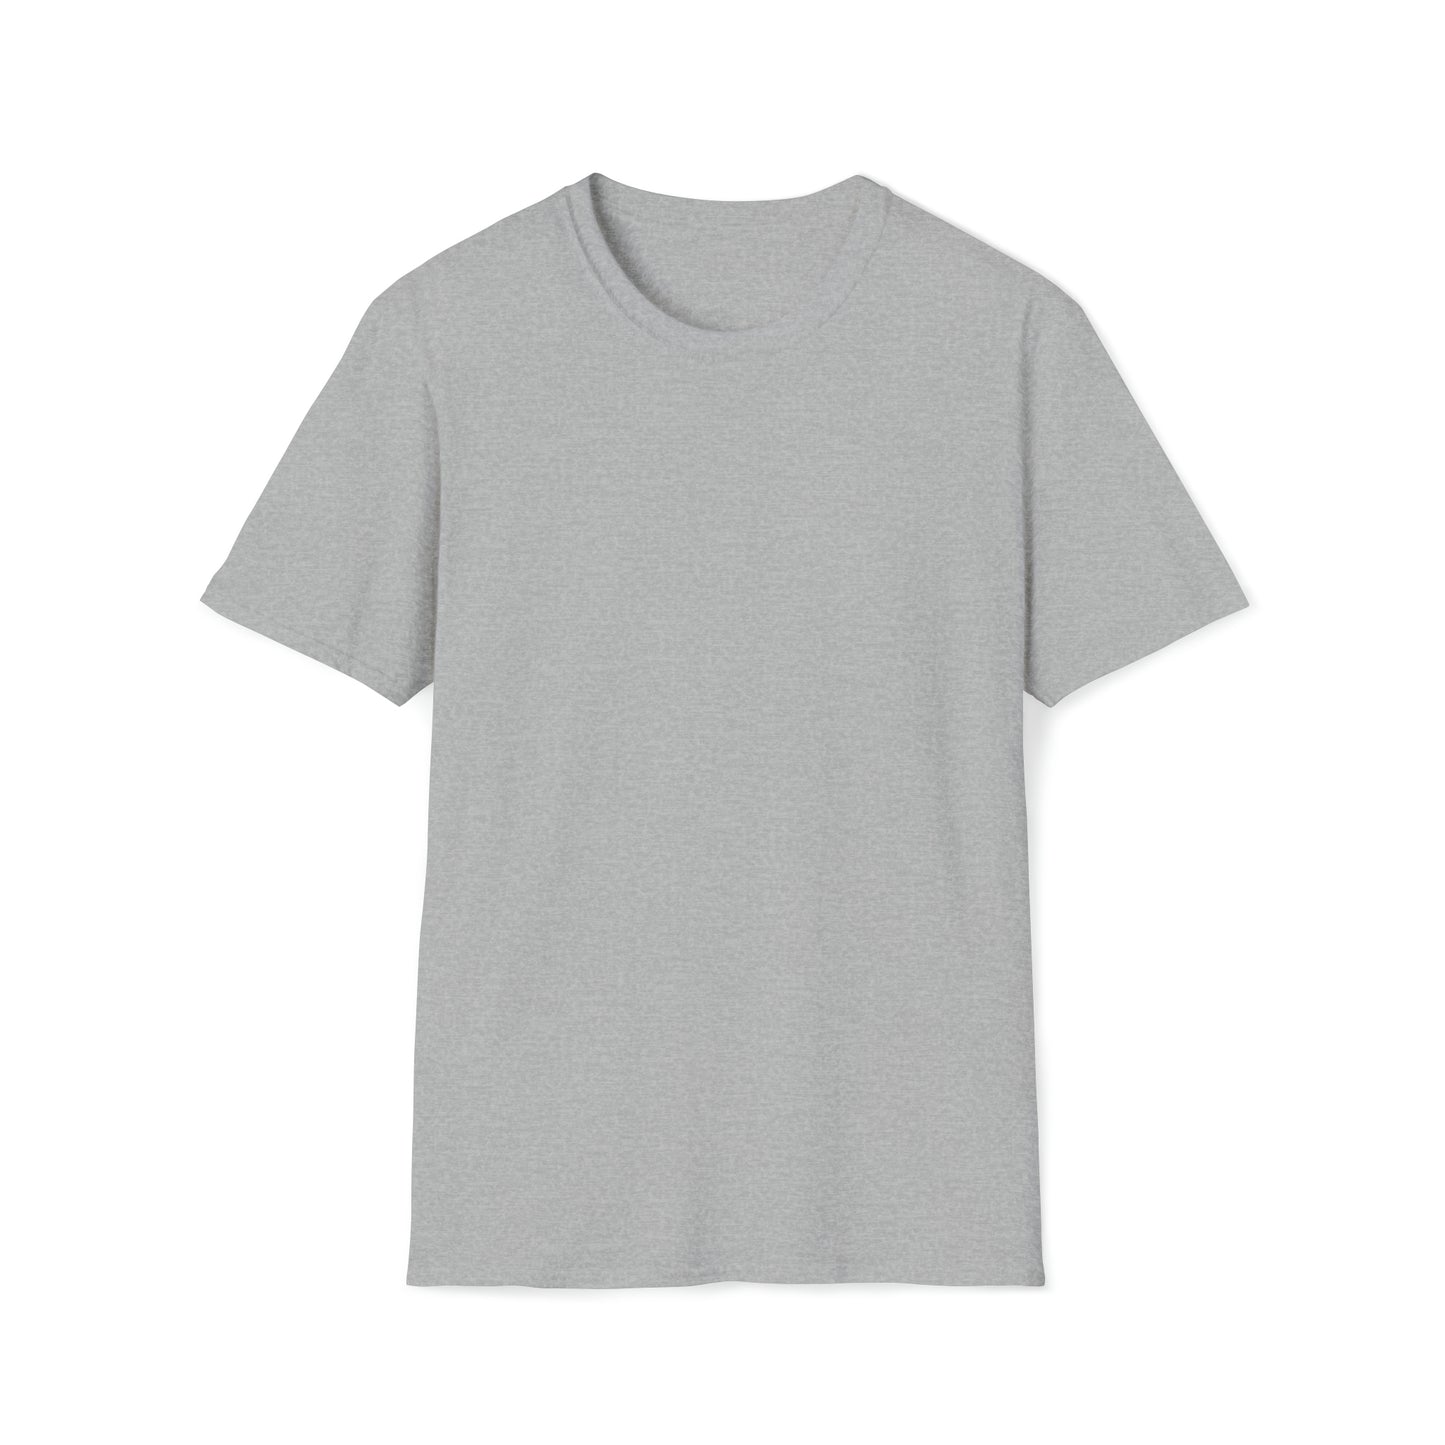 Unisex Softstyle T-Shirt personalized